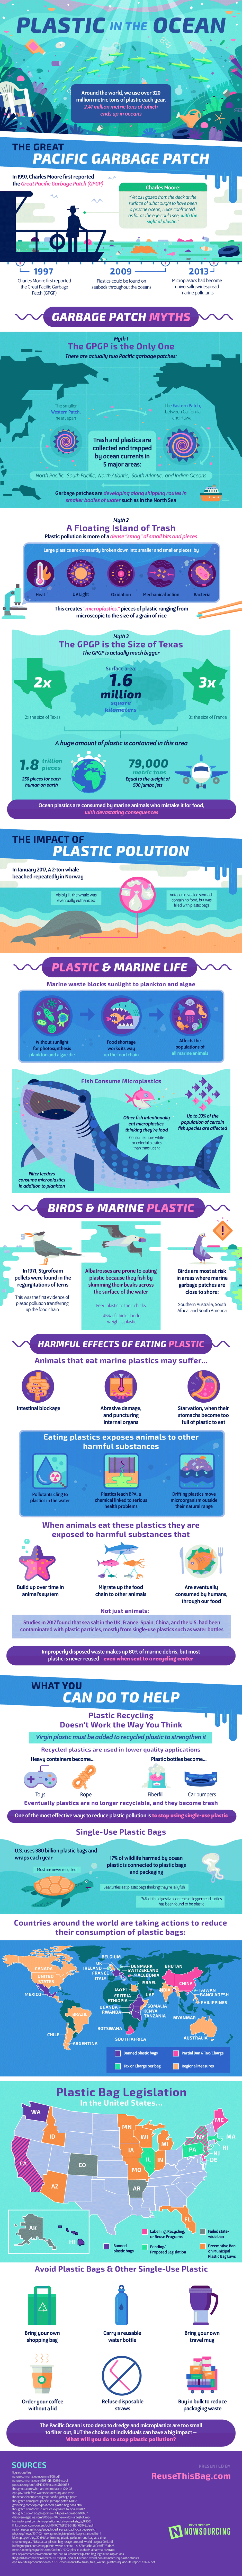 Plastics in Our Oceans [INFOGRAPHIC]